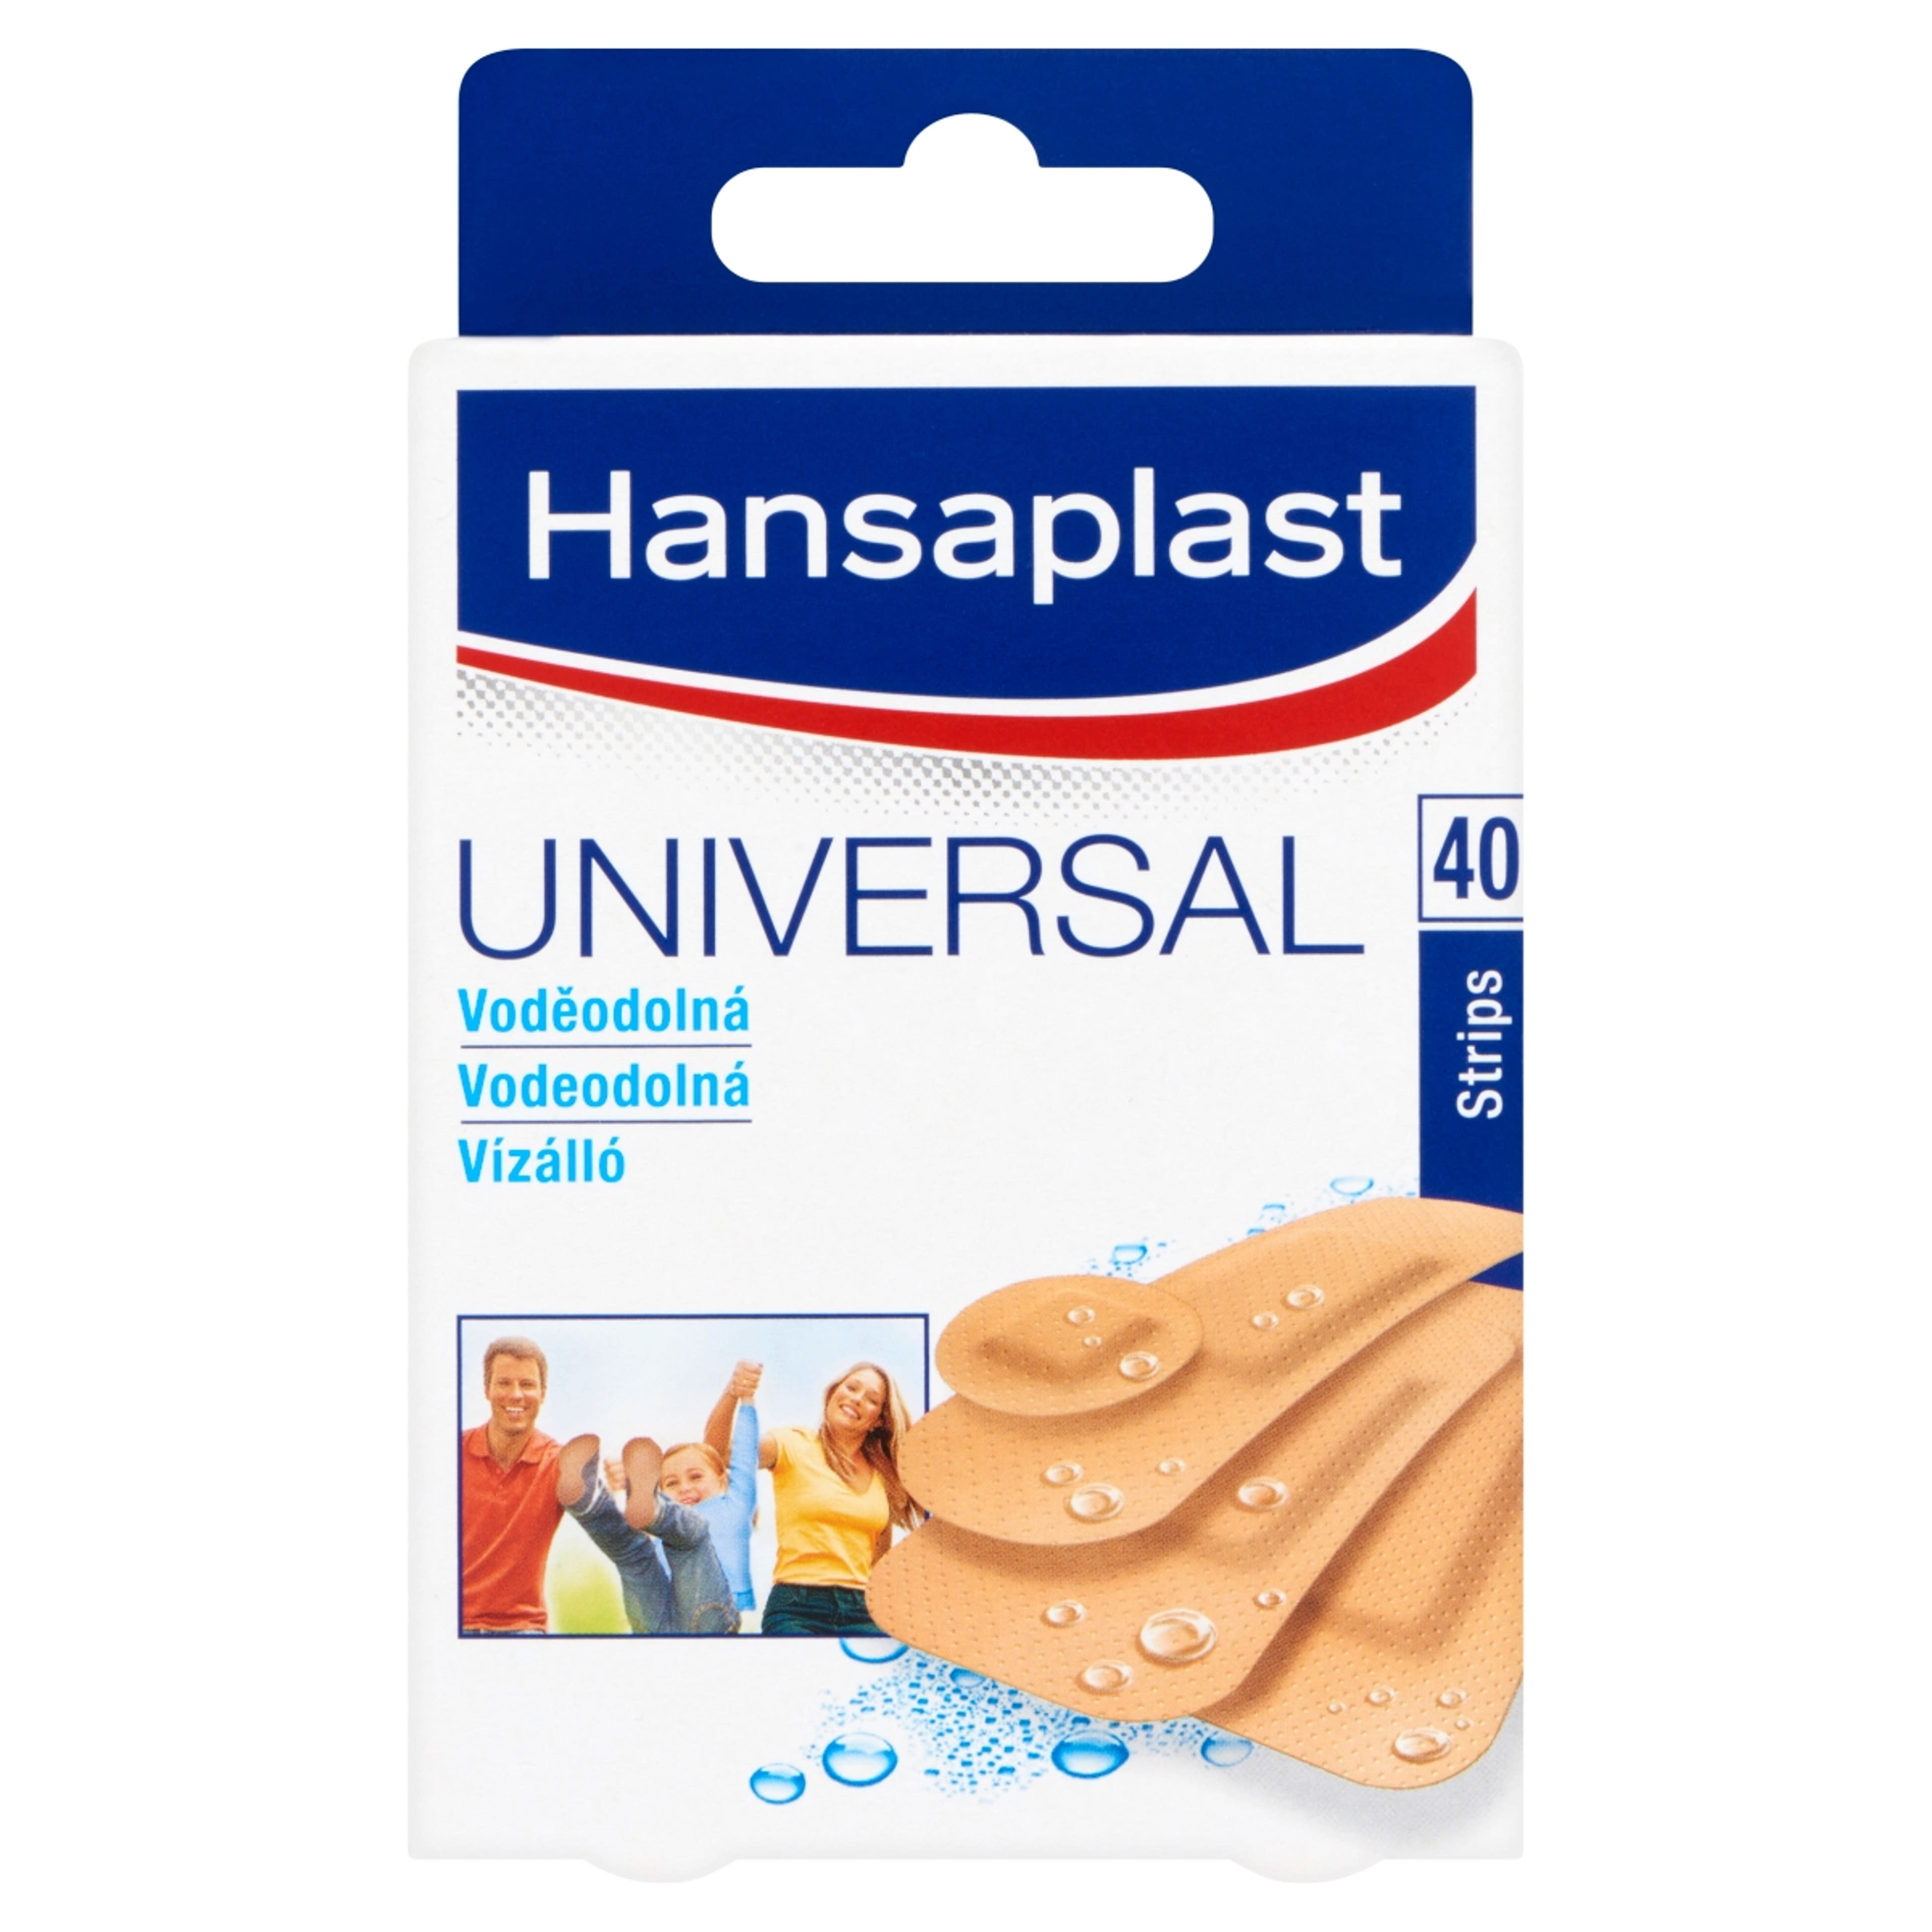 Hansaplast Universal - 40 db